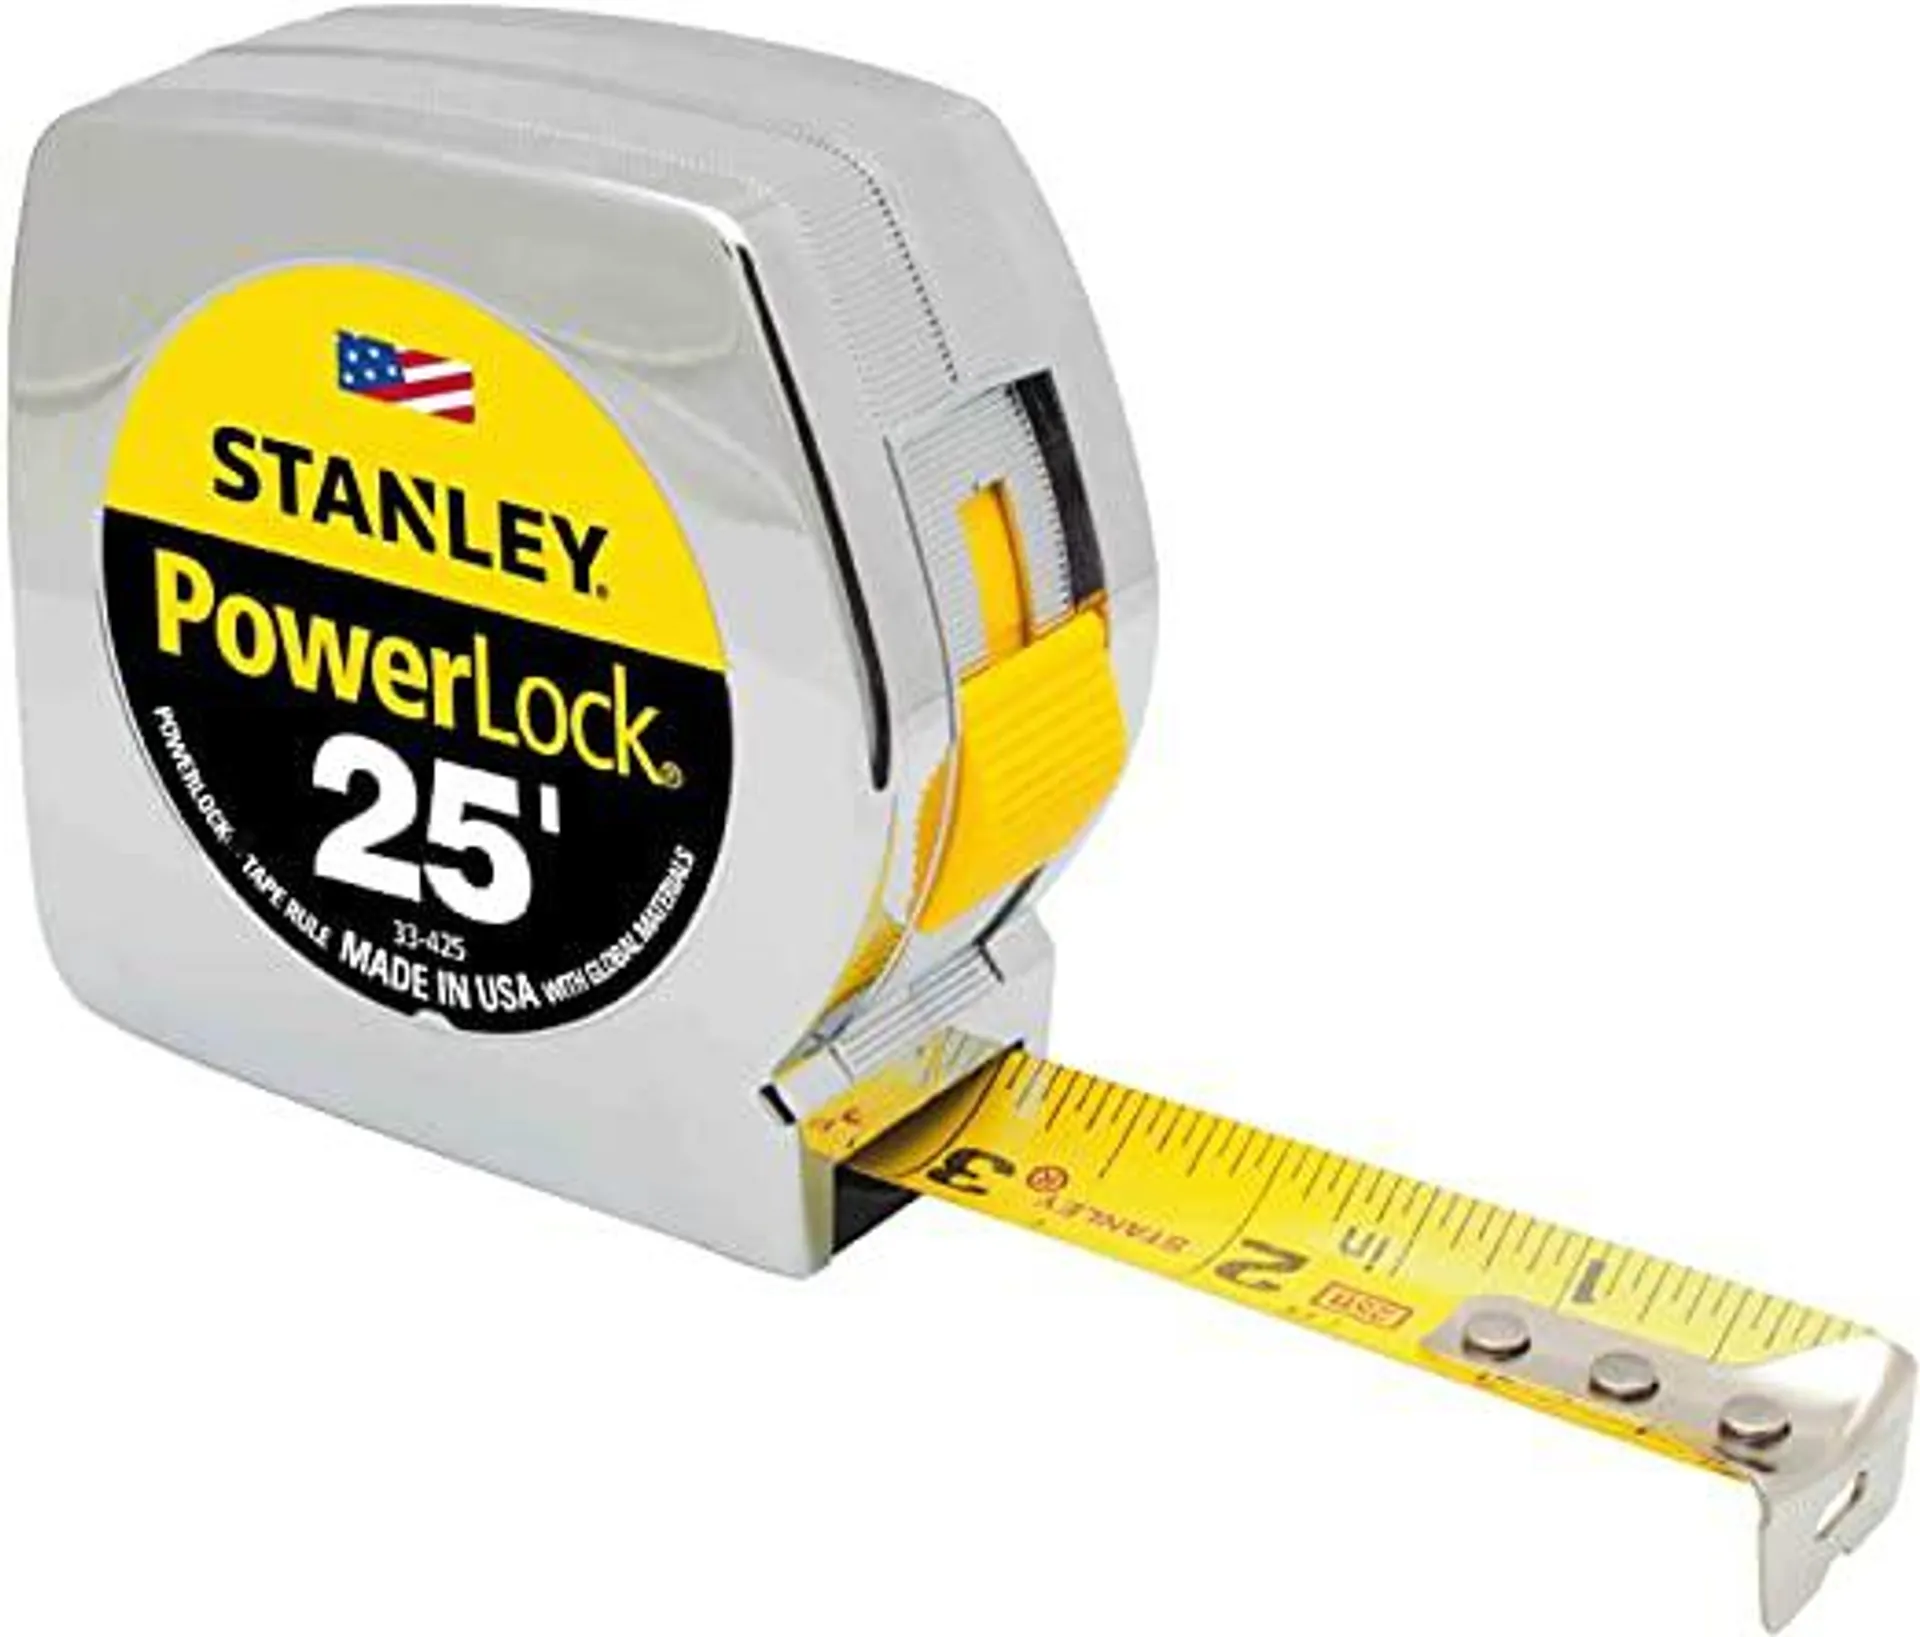 Stanley PowerLock Tape Measure (Carton of 4, 25-Foot)